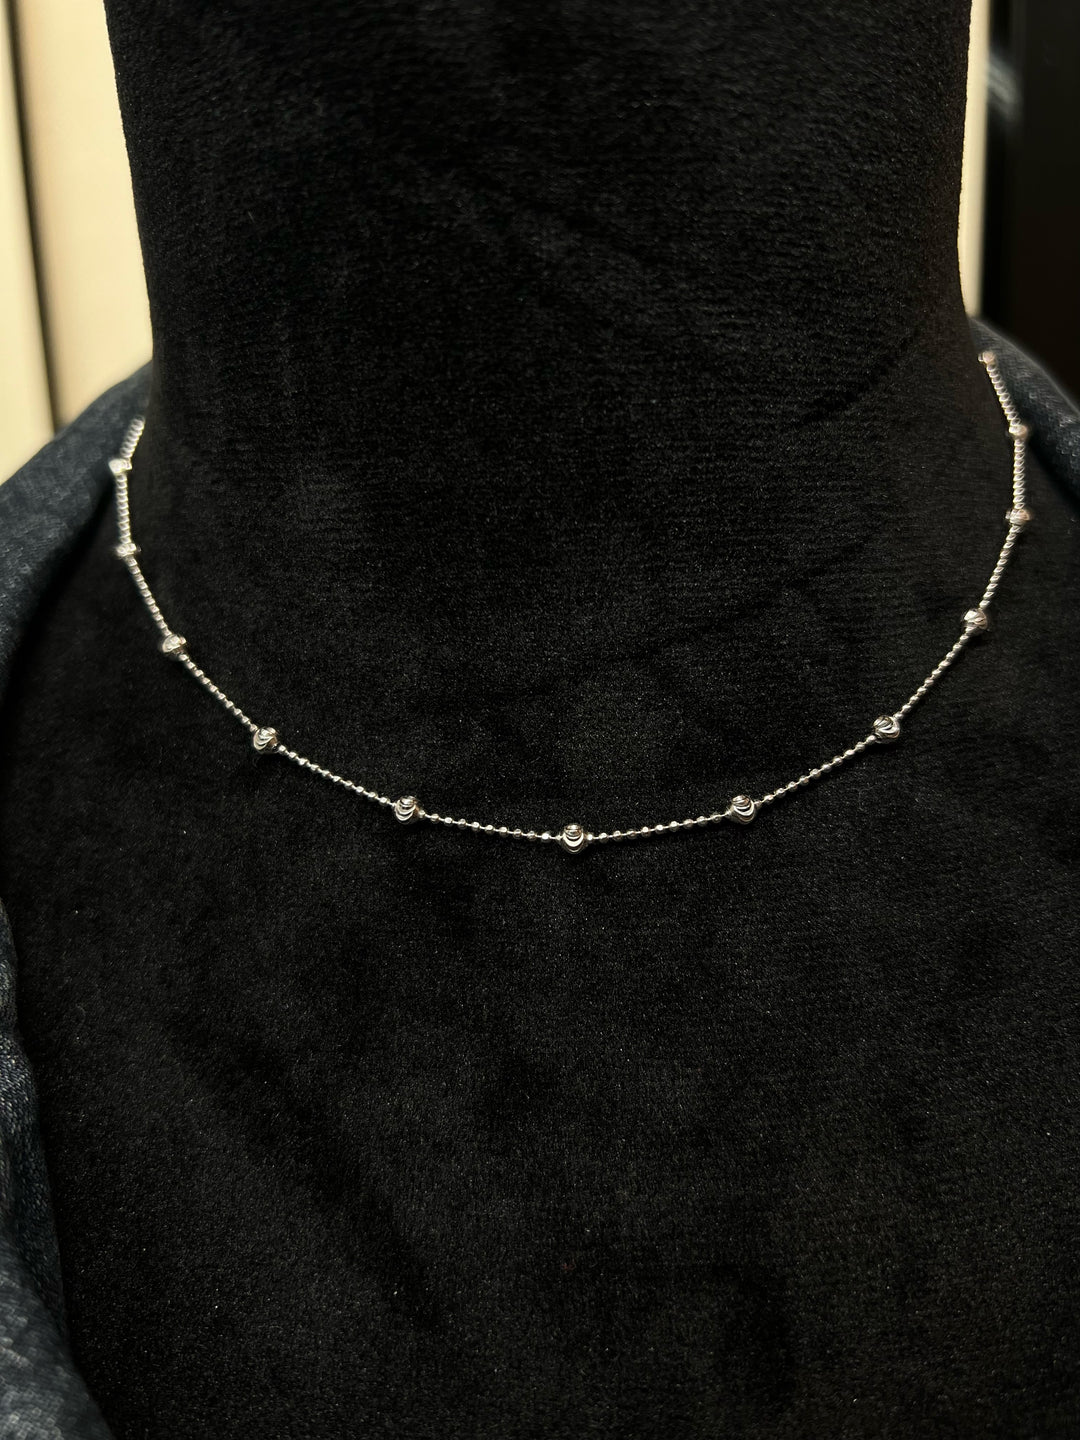 Italian Sterling Silver Moon-Cut Bead Necklace